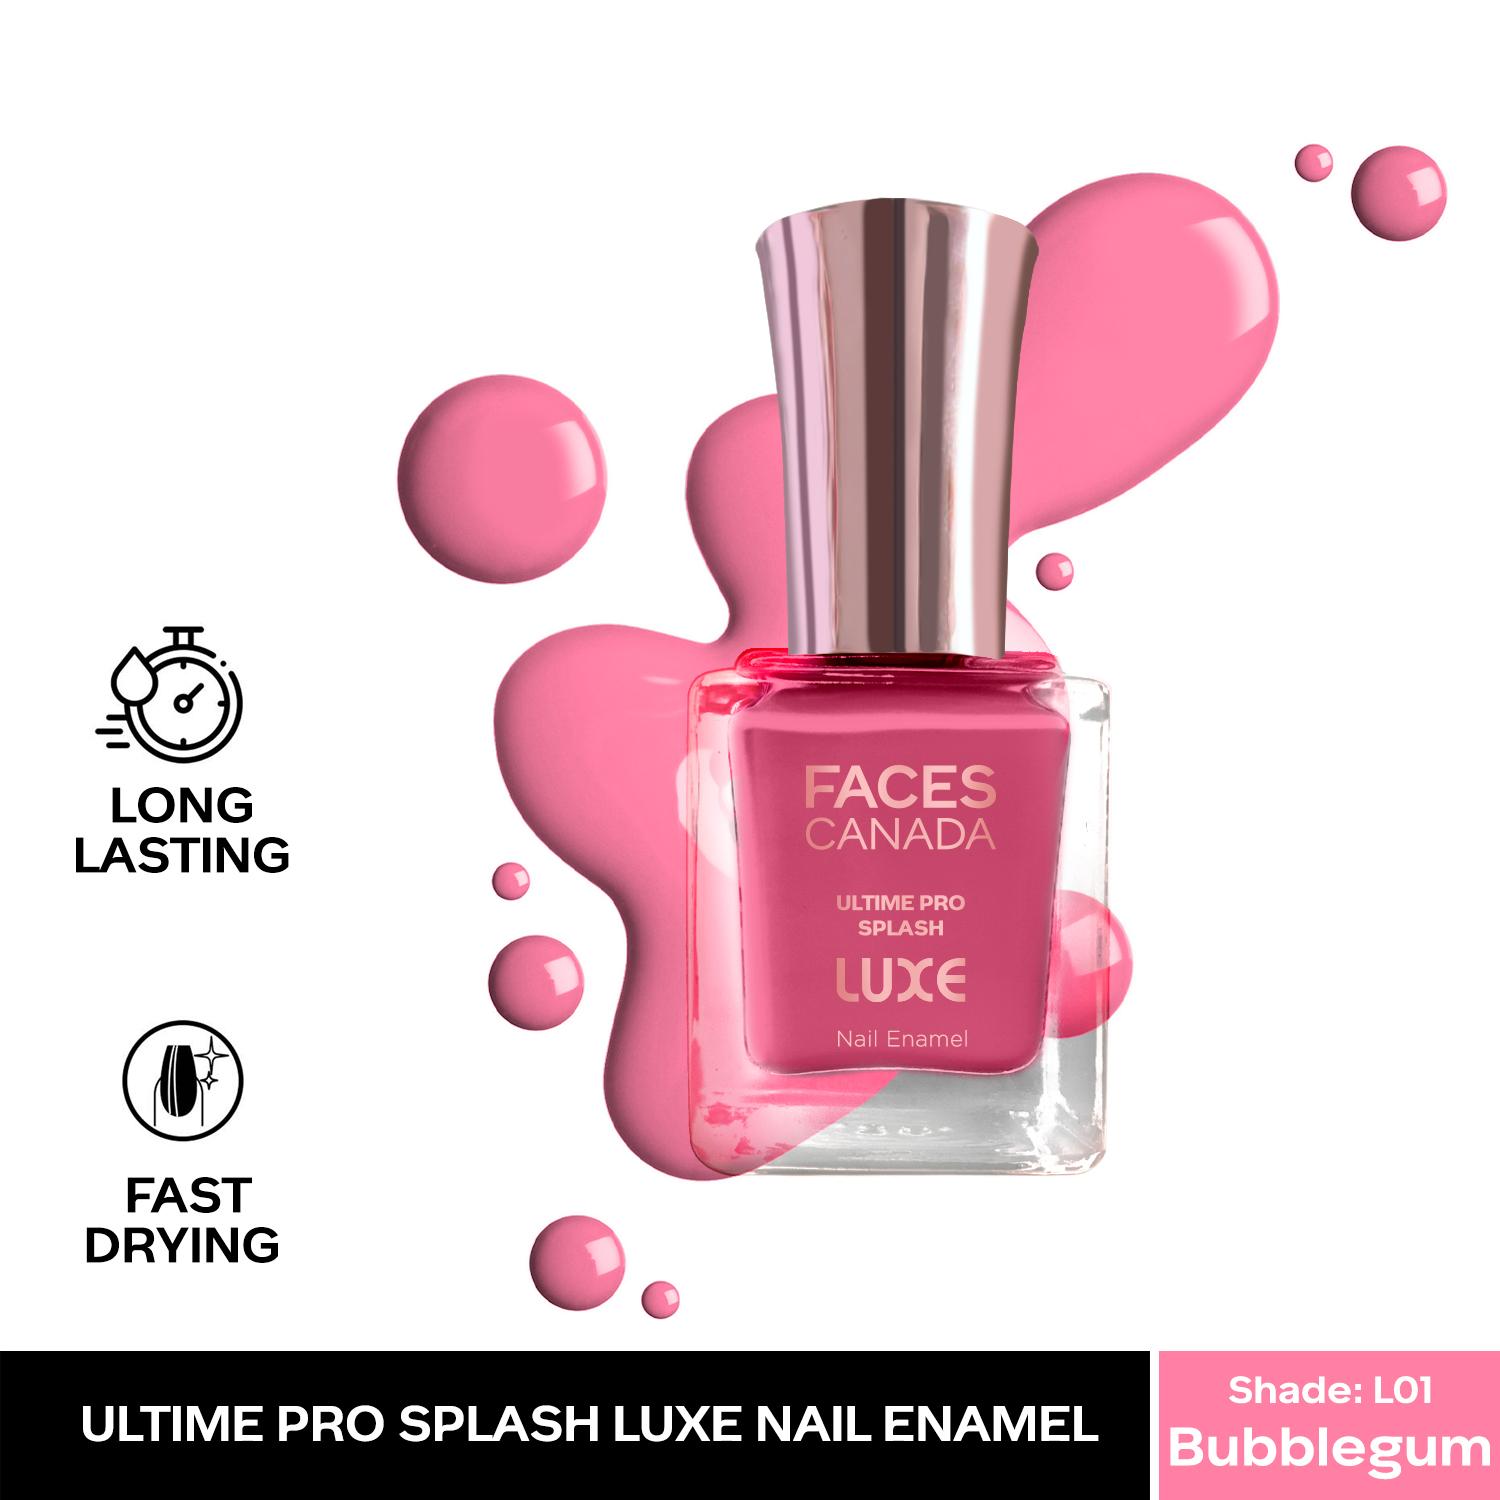 Faces Canada | Faces Canada Ultime Pro Splash Luxe Nail Enamel - Bubblegum (L01), Glossy Finish (12 ml)